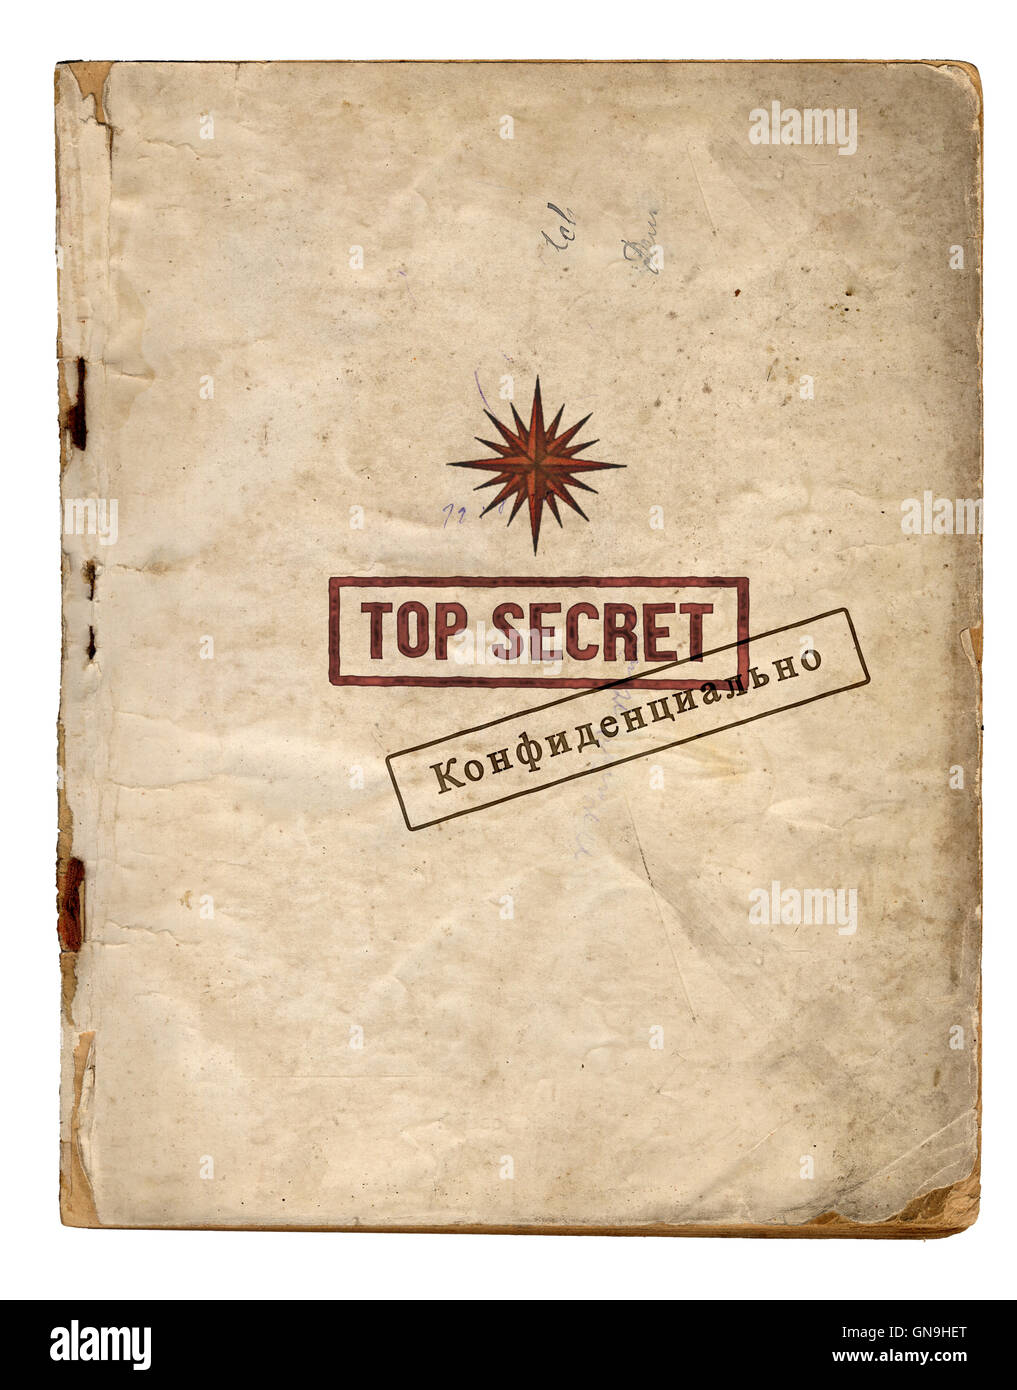 Top Secret Files / Confidential Stock Photo